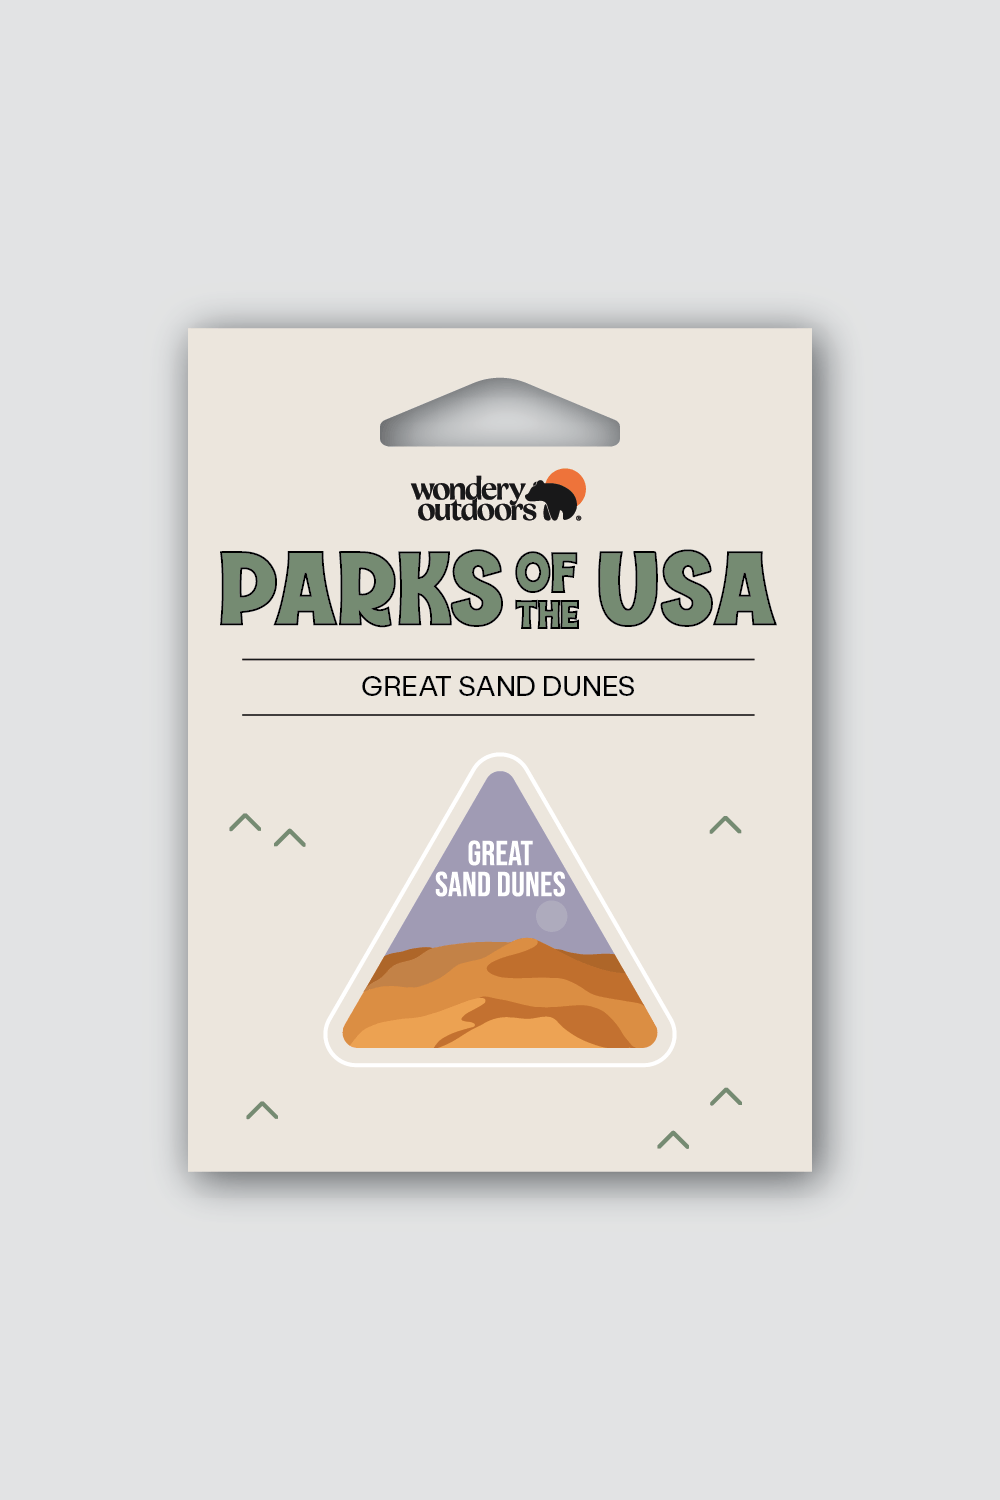 #national park_great sand dunes _USA National Parks souvenir sticker gift sets